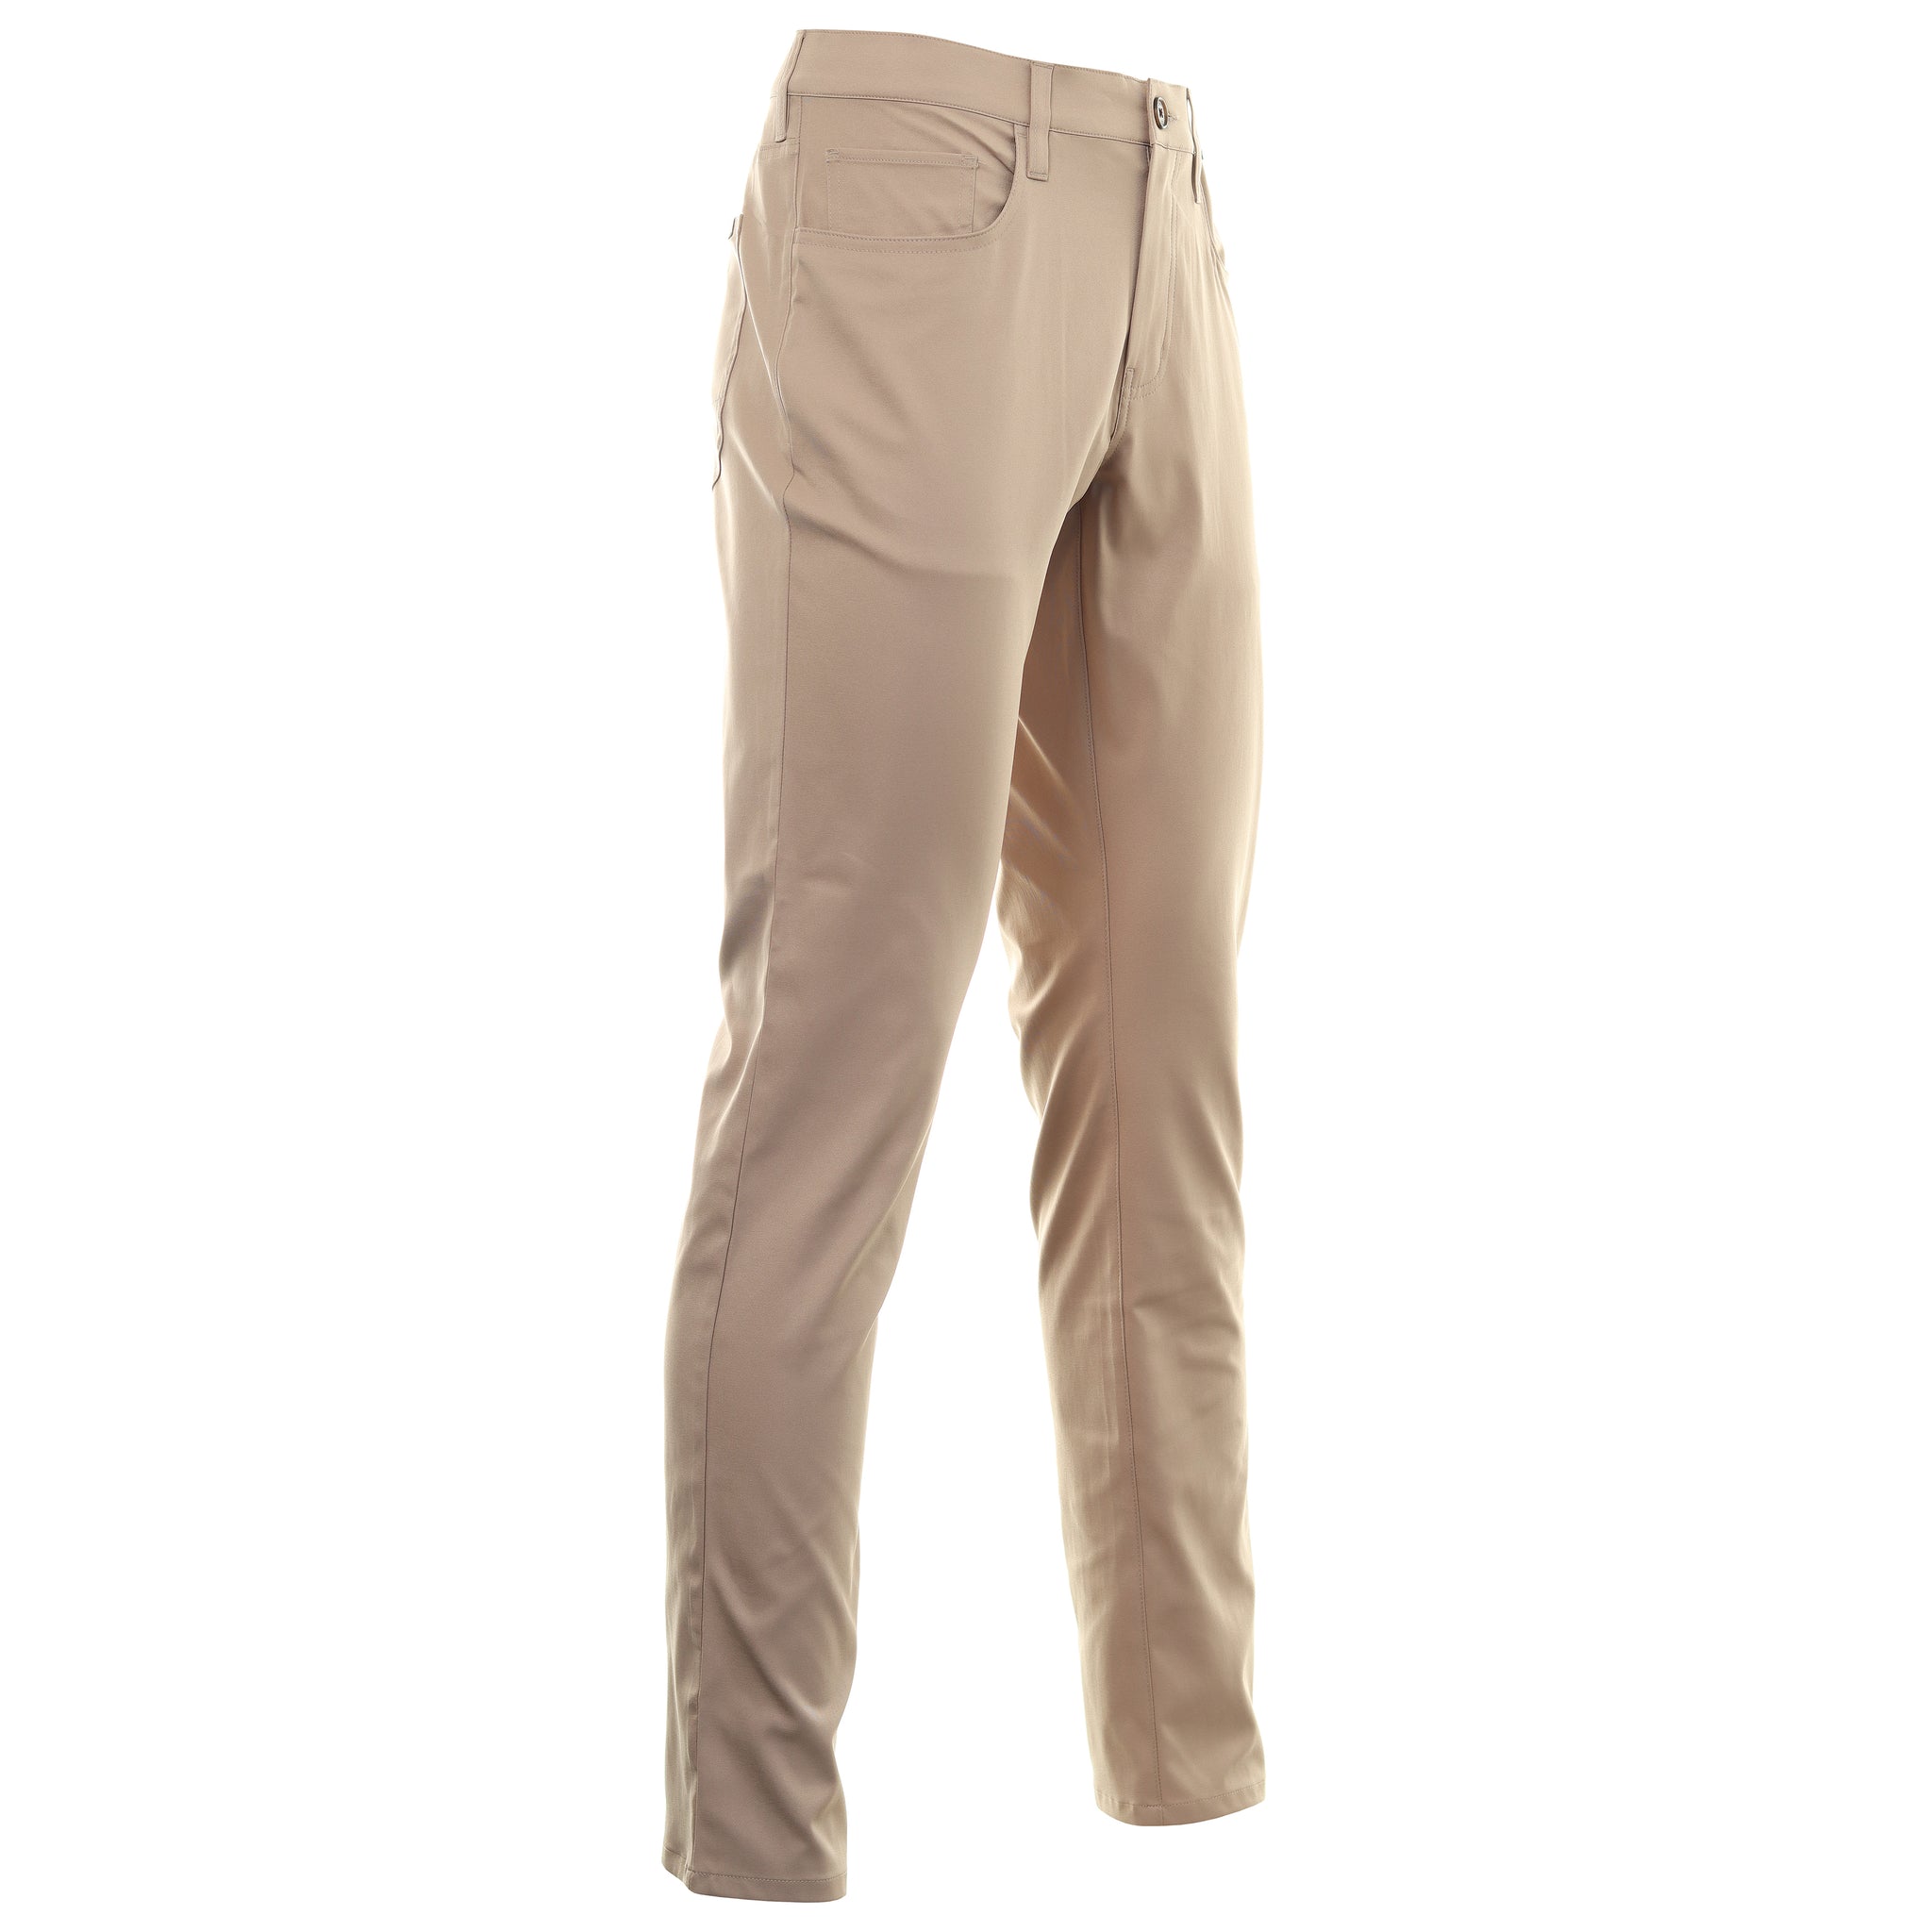 travismathew-open-to-close-trousers-1mt435-khaki